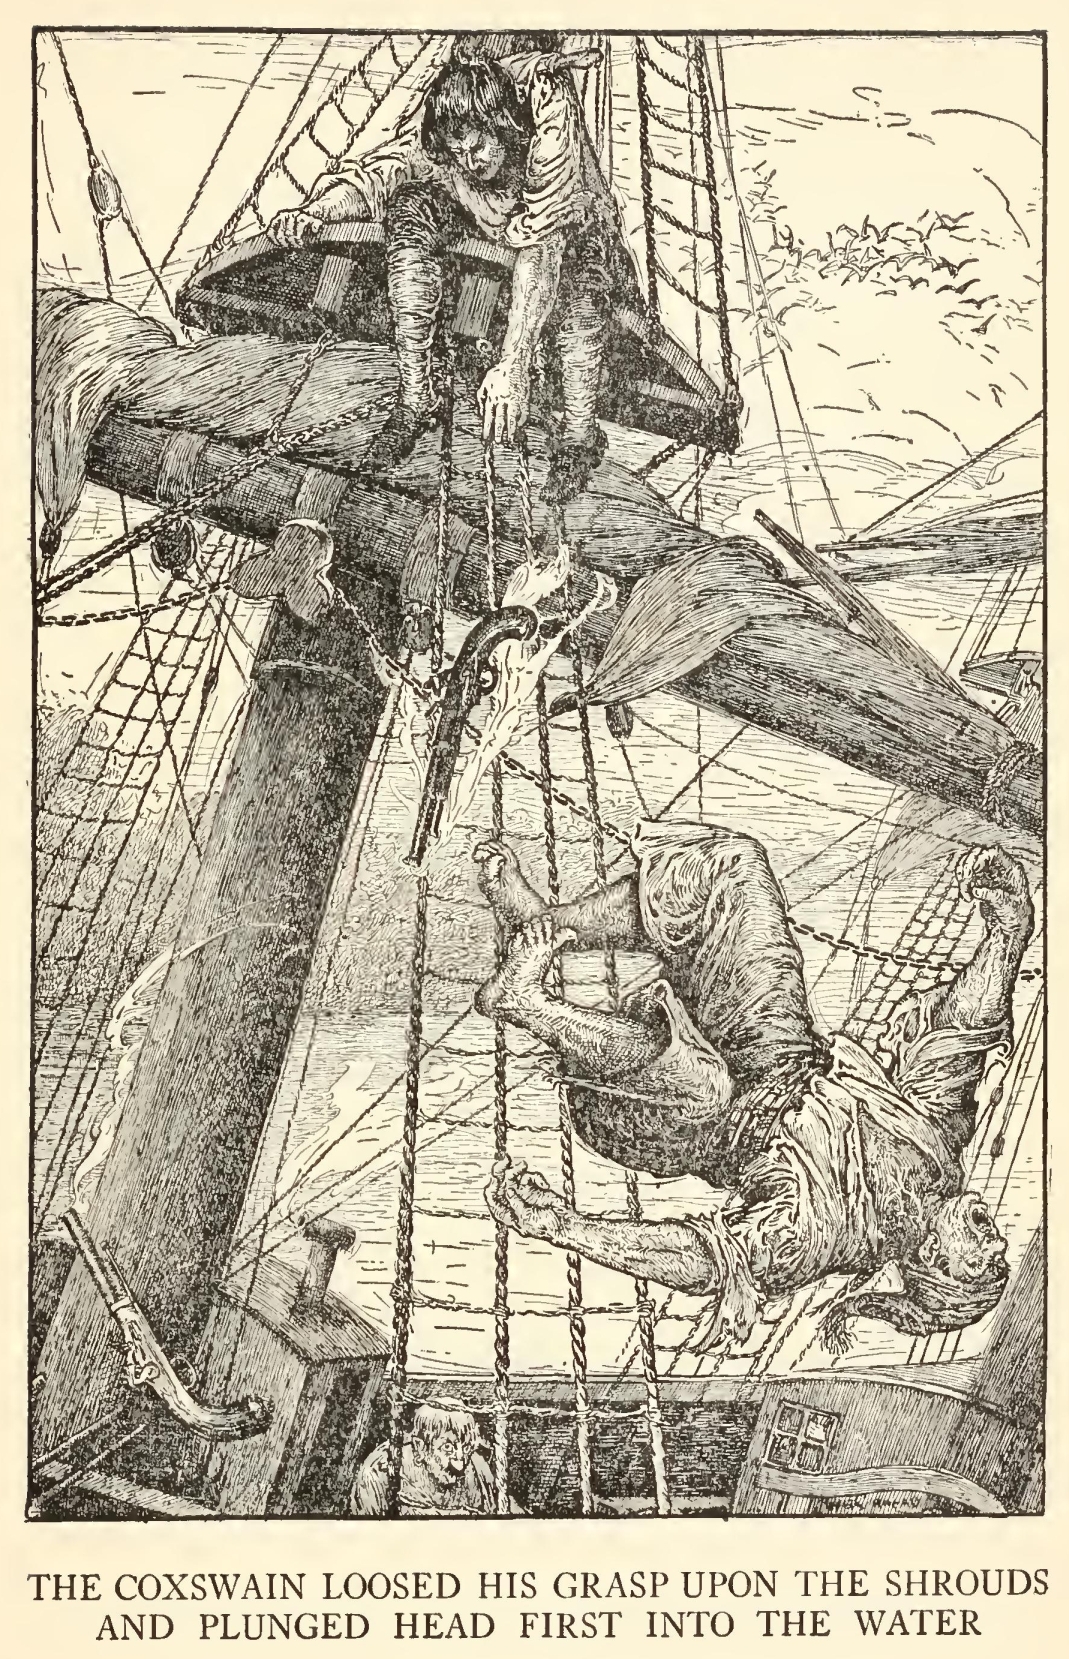 The Project Gutenberg eBook of Treasure Island, by Robert Louis Stevenson